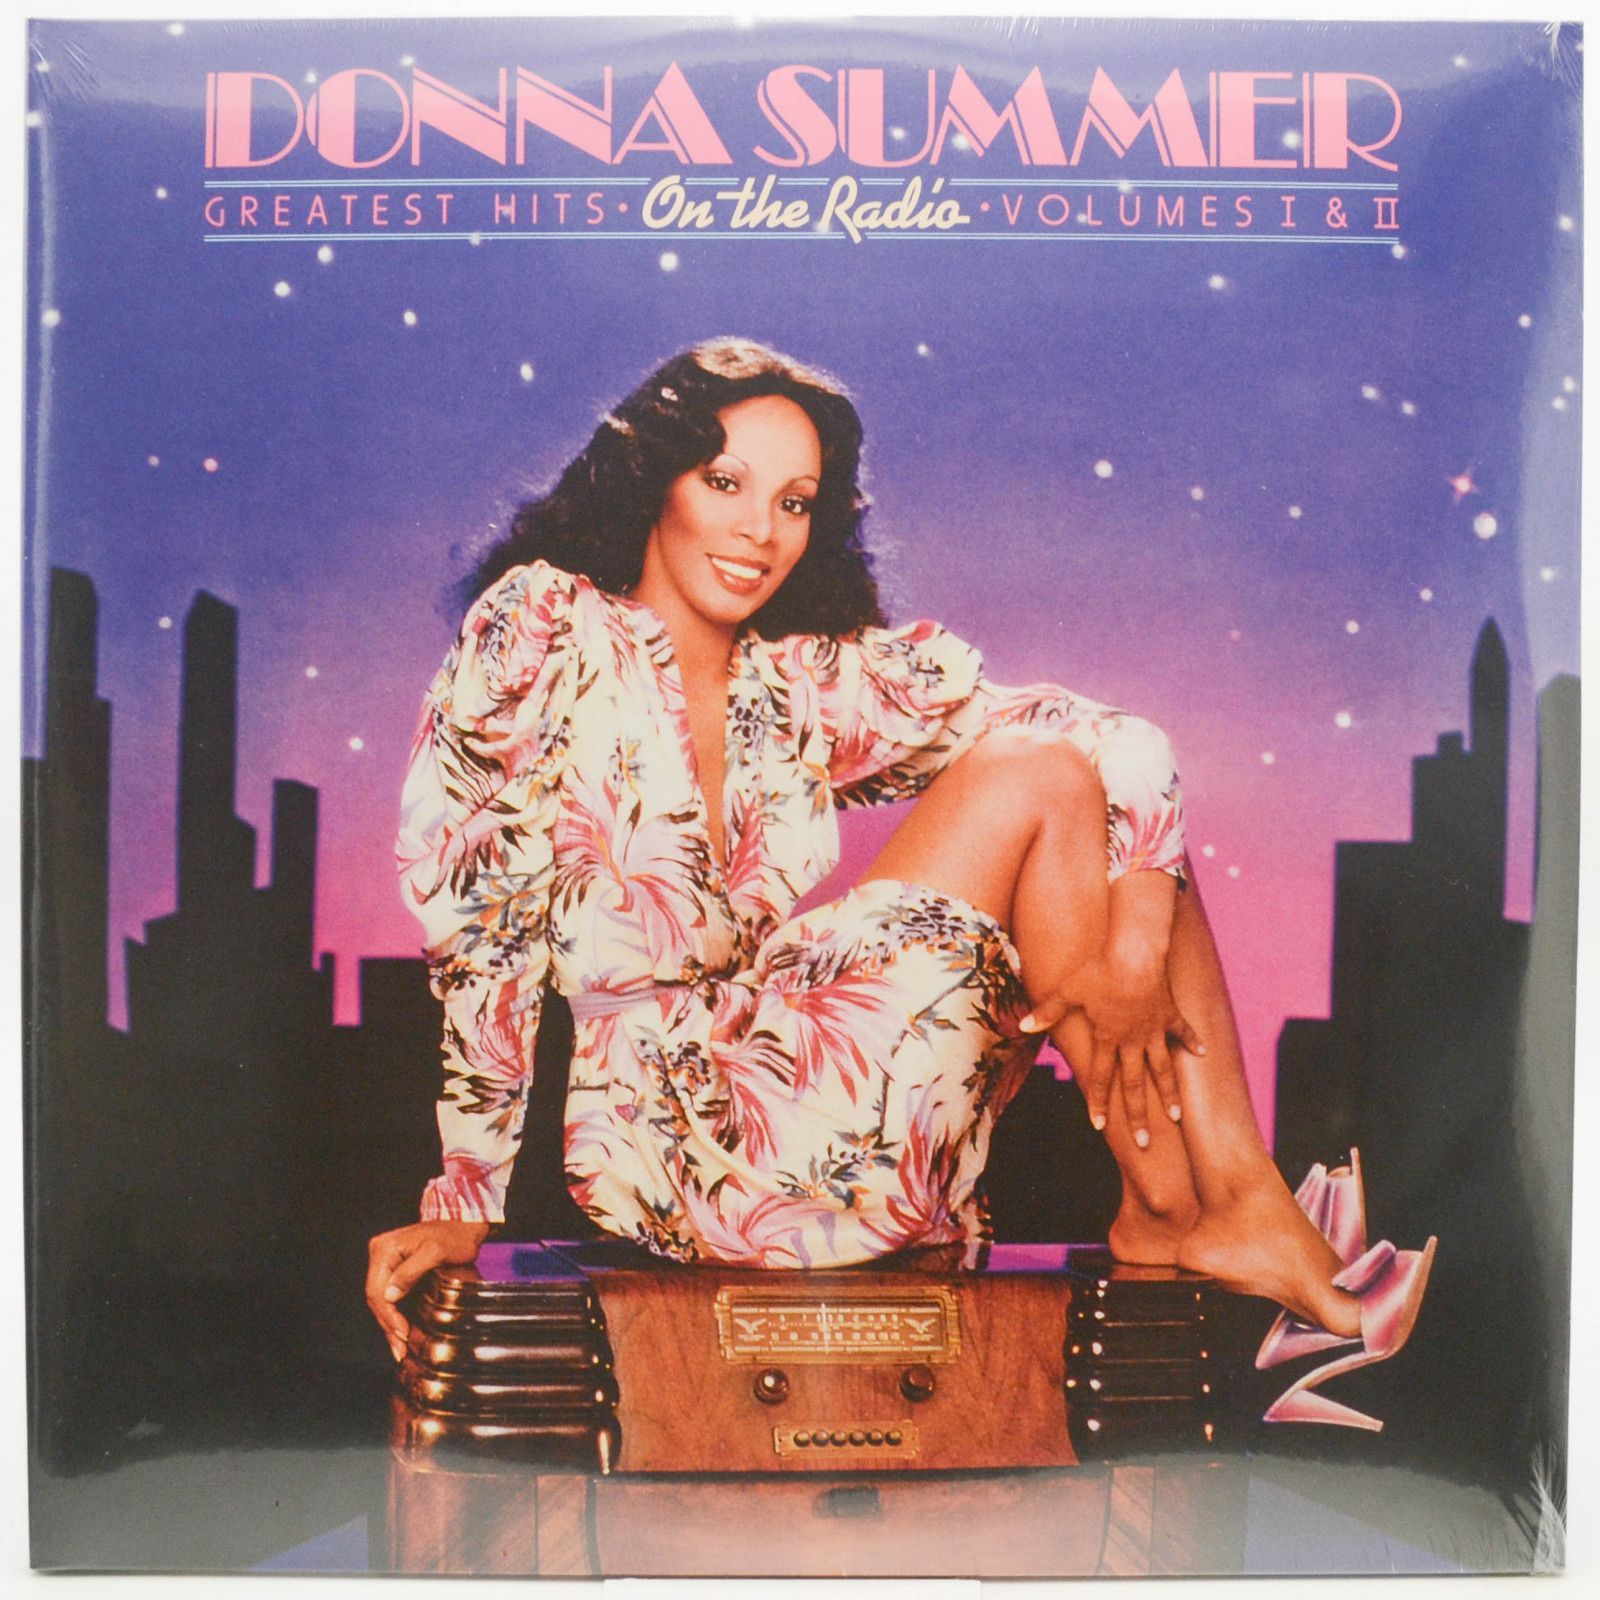 Donna Summer — On The Radio: Greatest Hits Vol. I & II (2LP), 1979